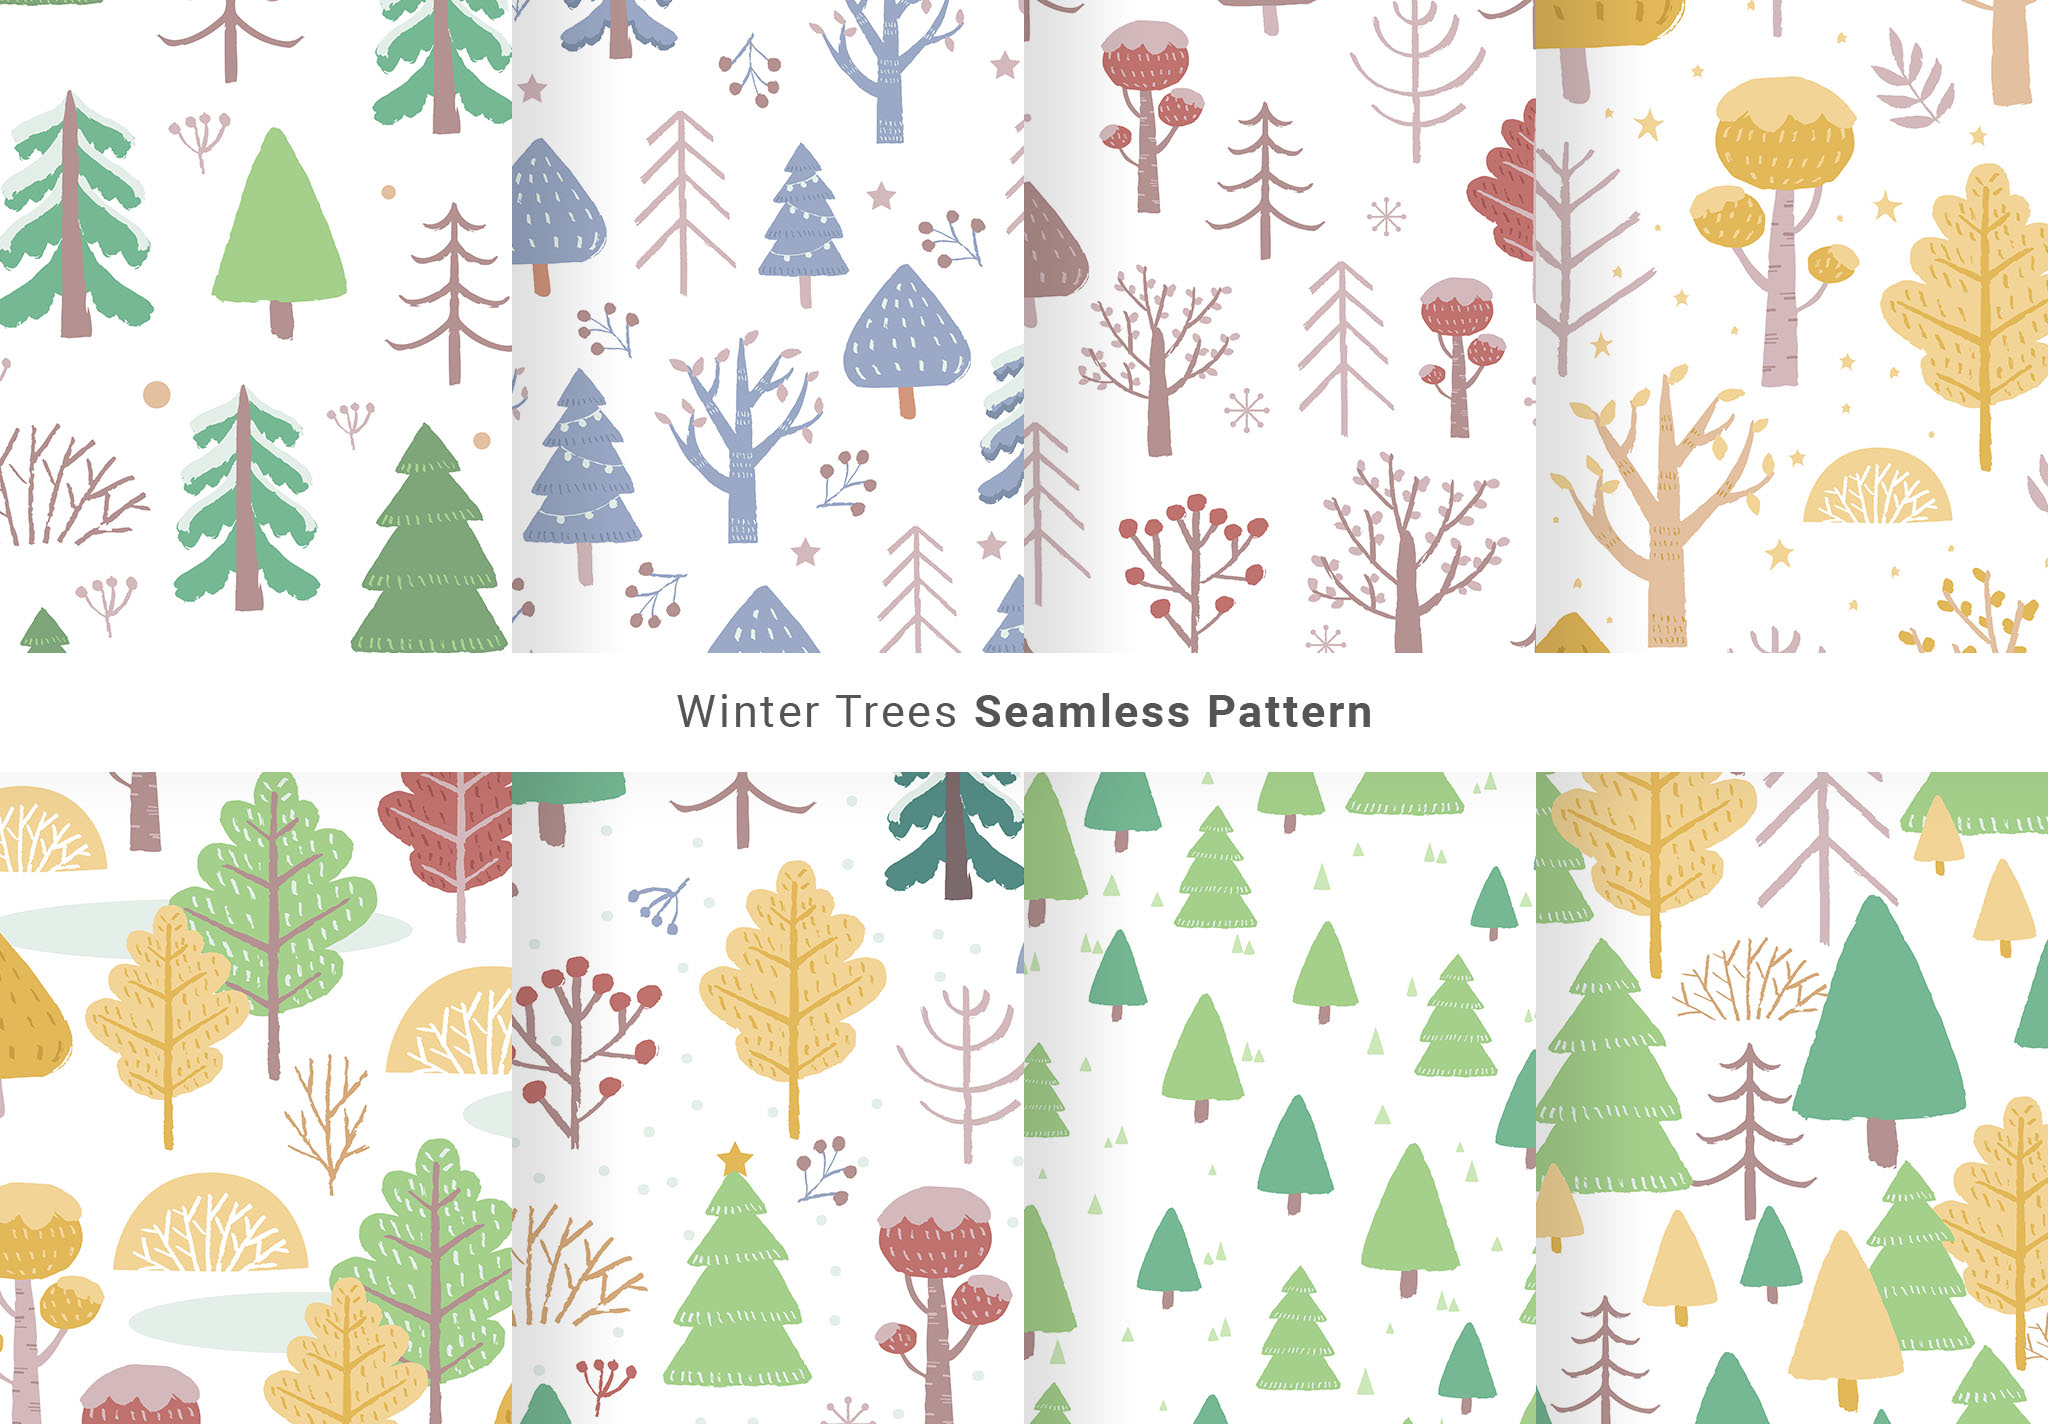 Winter Christmas Tree Patterns for Photoshop & Illustrator